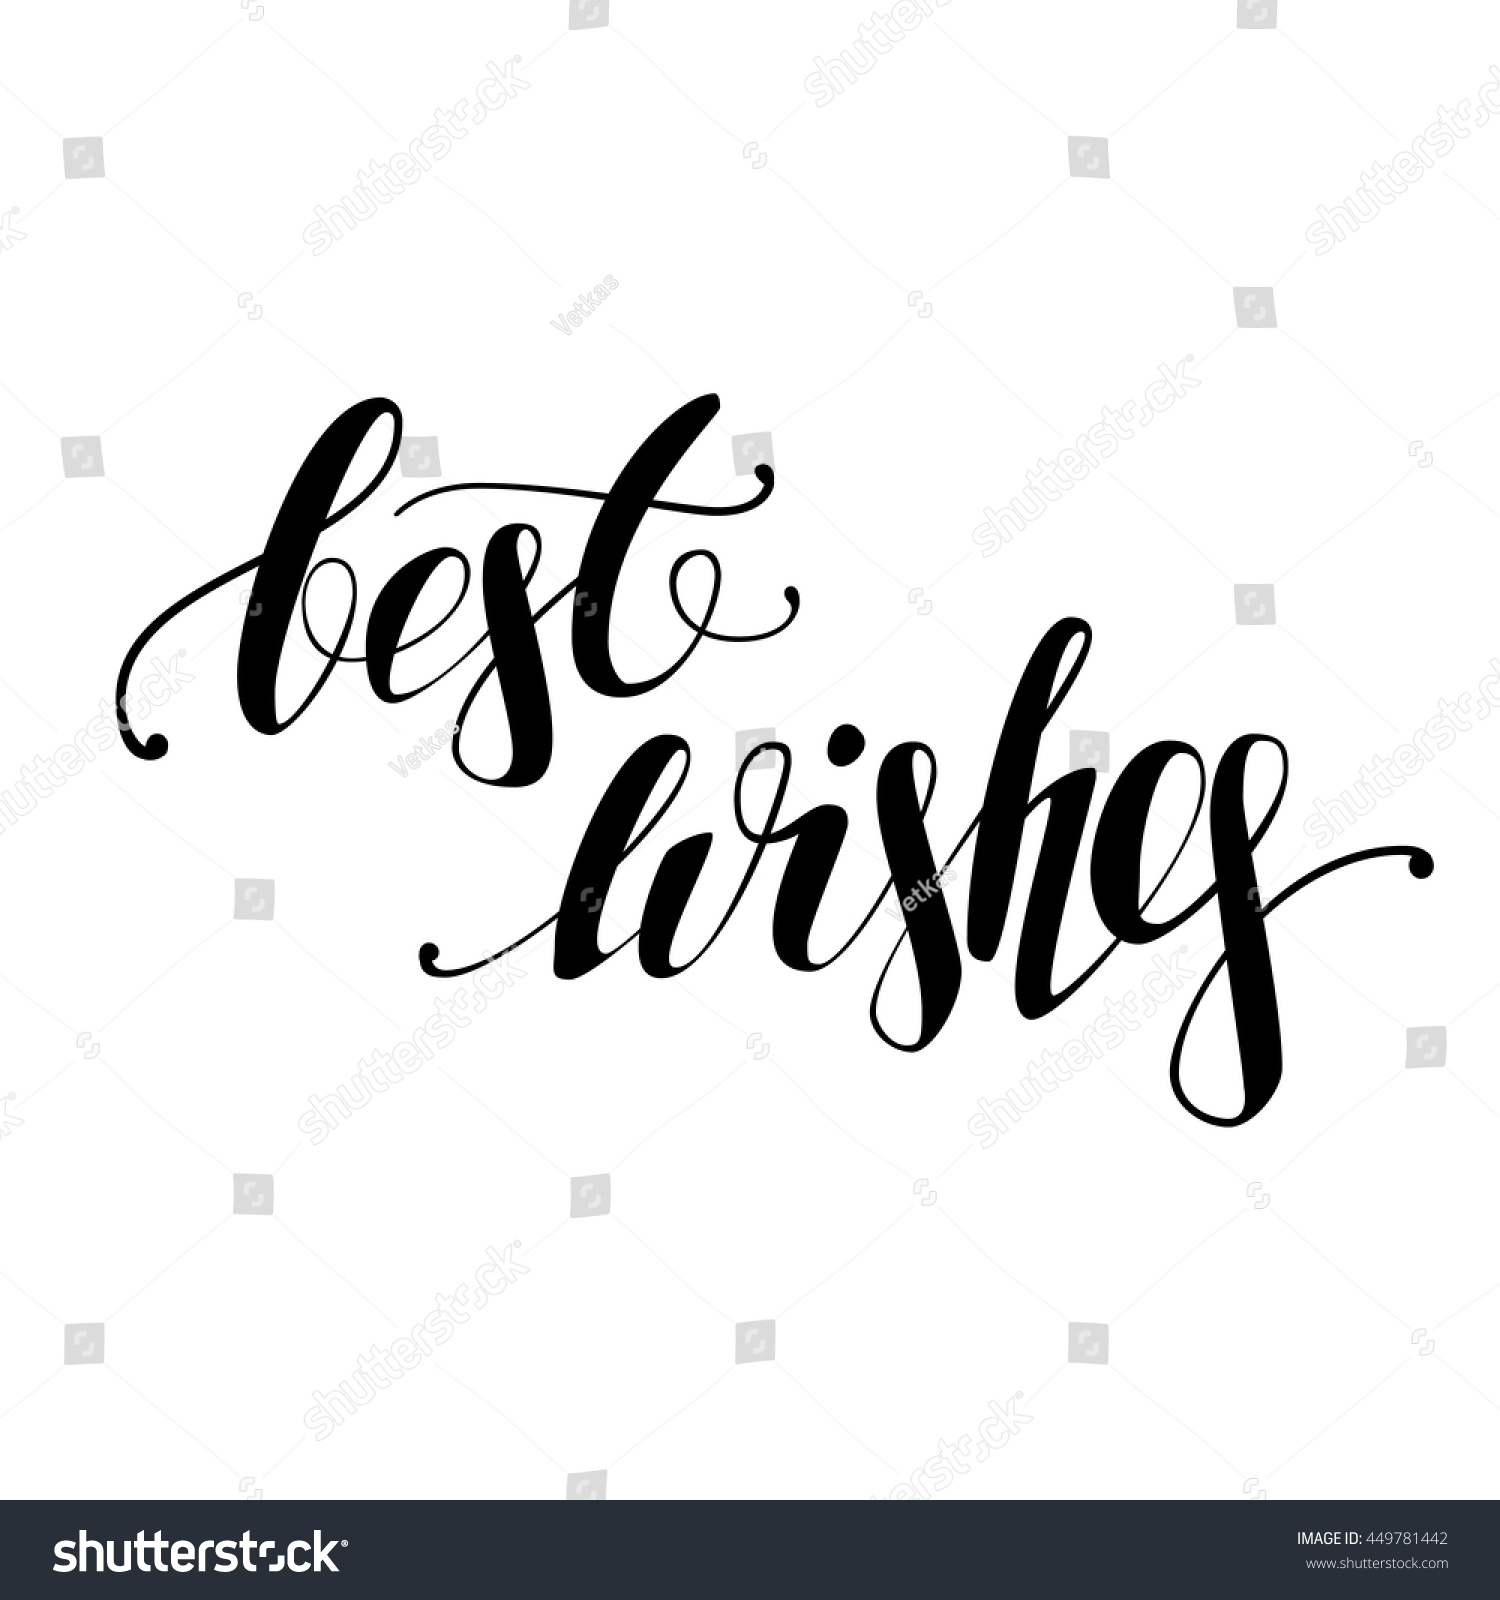 Best Wishes. Vector Hand Lettering. - 449781442 : Shutterstock